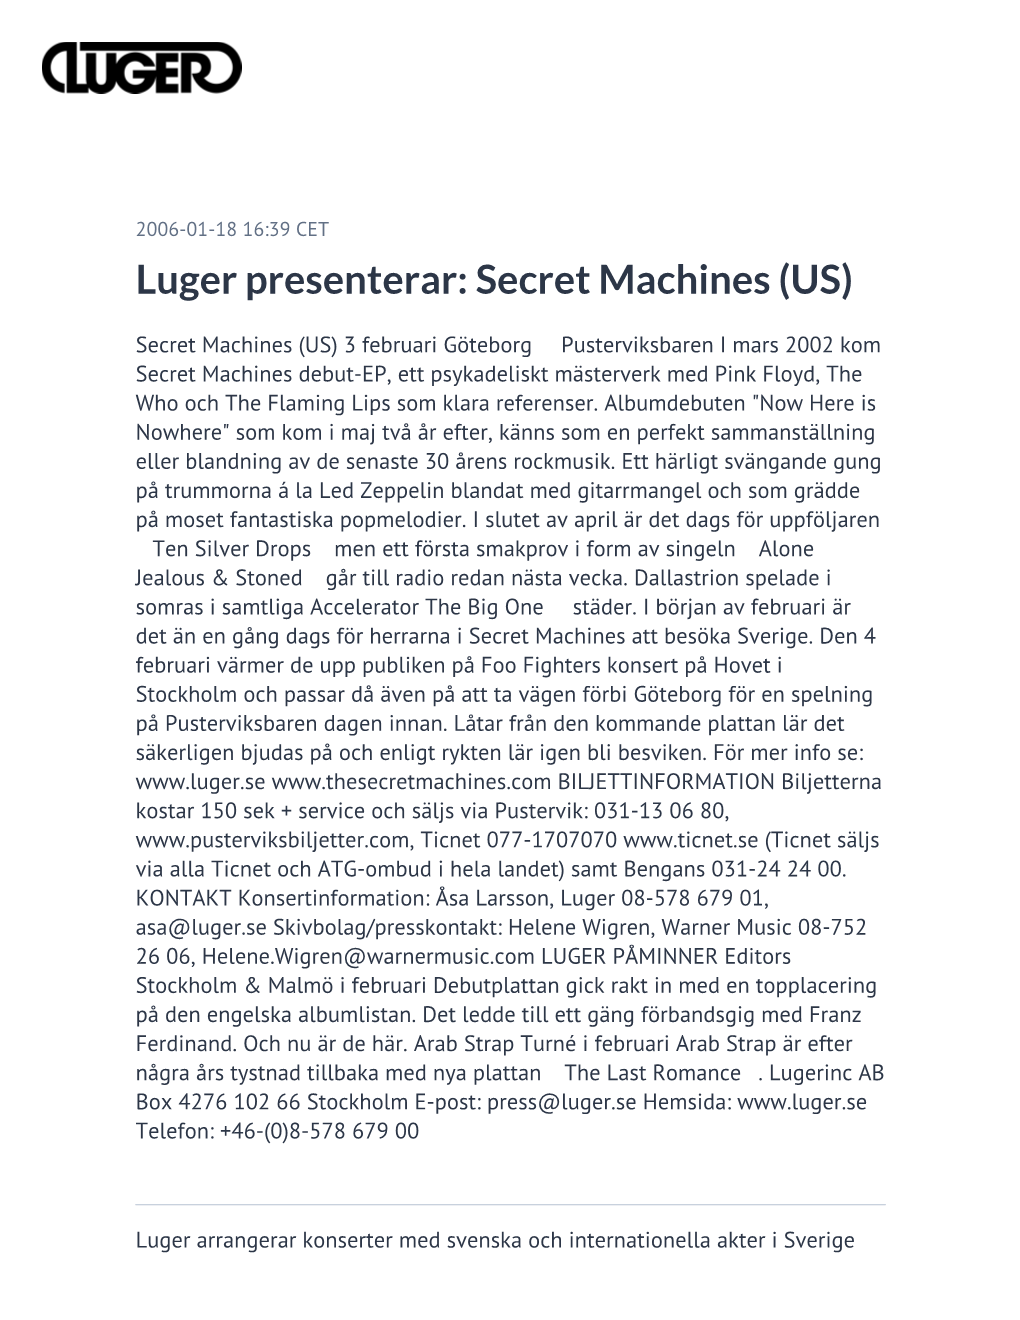 Luger Presenterar: Secret Machines (US)